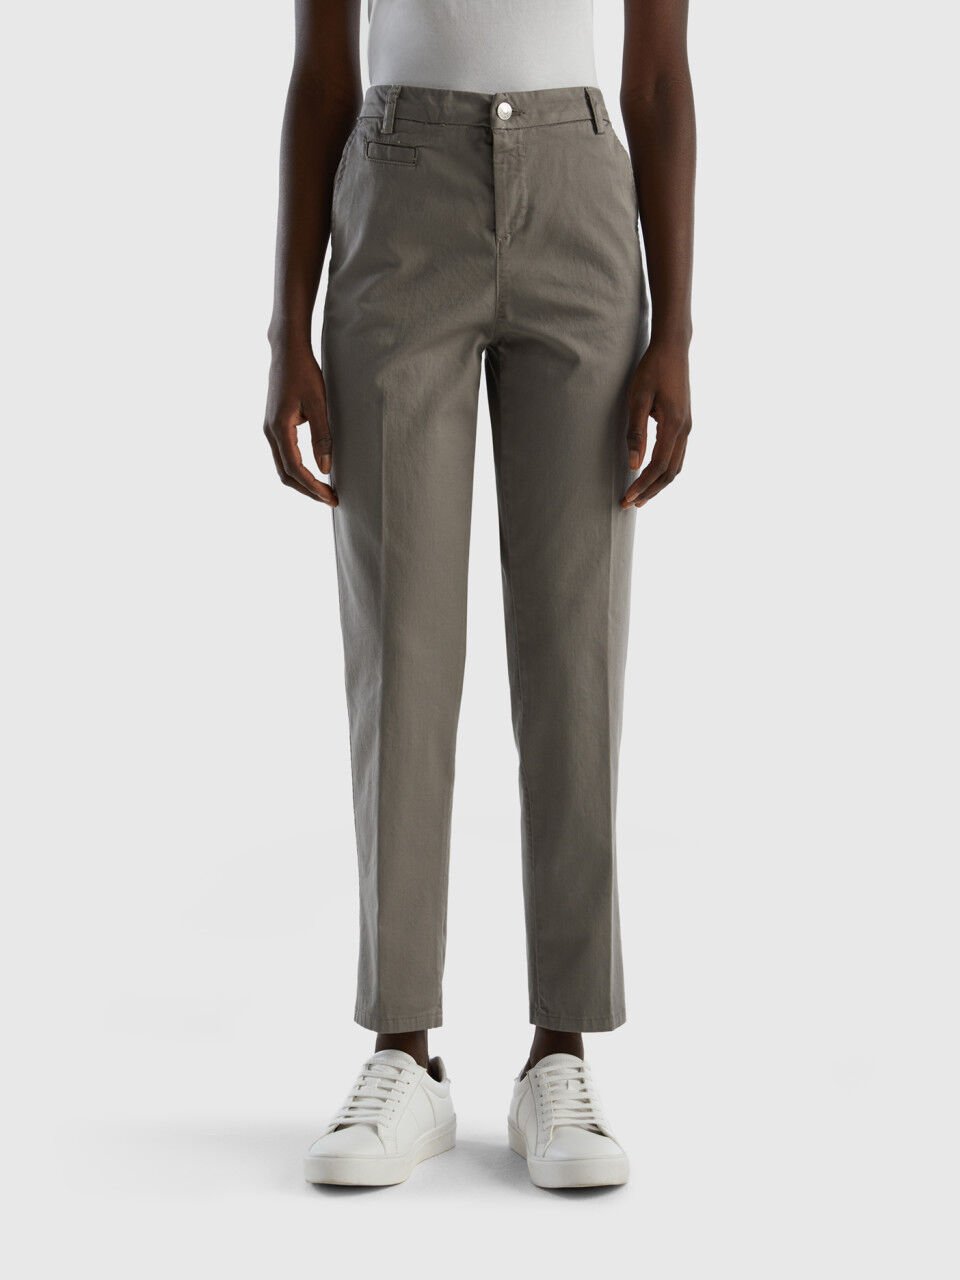 Buy khaki Trousers  Pants for Women by LEVIS Online  Ajiocom